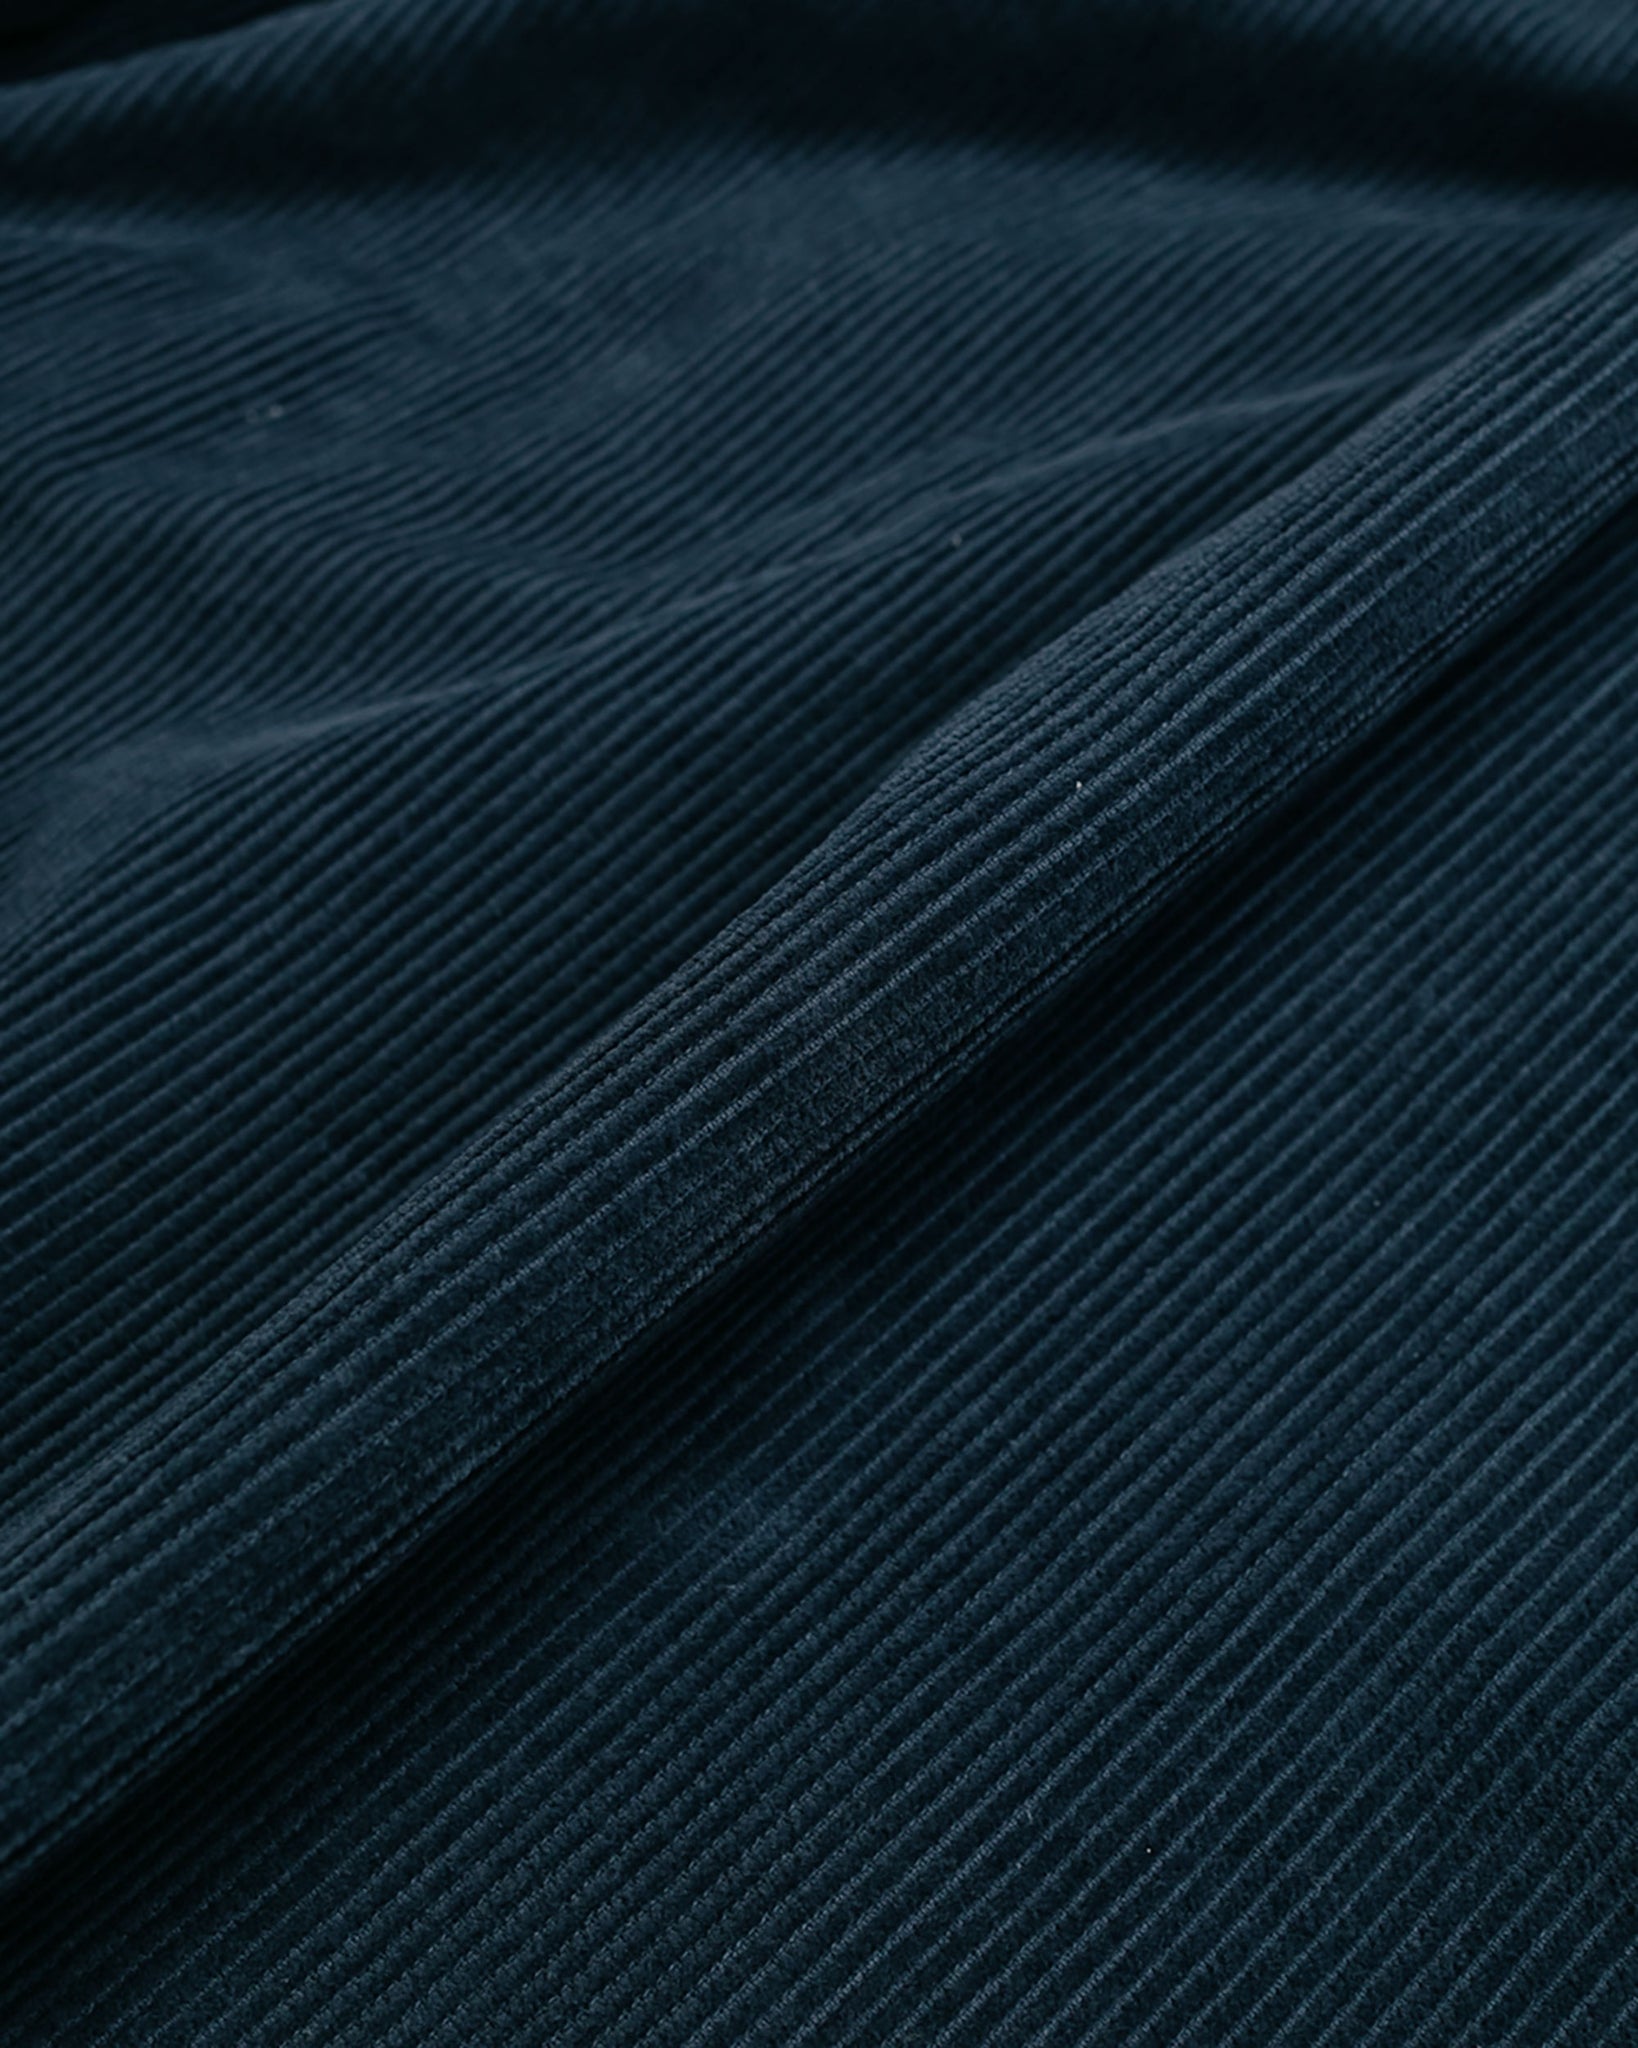 Save Khaki United Wide Wale Cord Camp Shirt Marine fabric